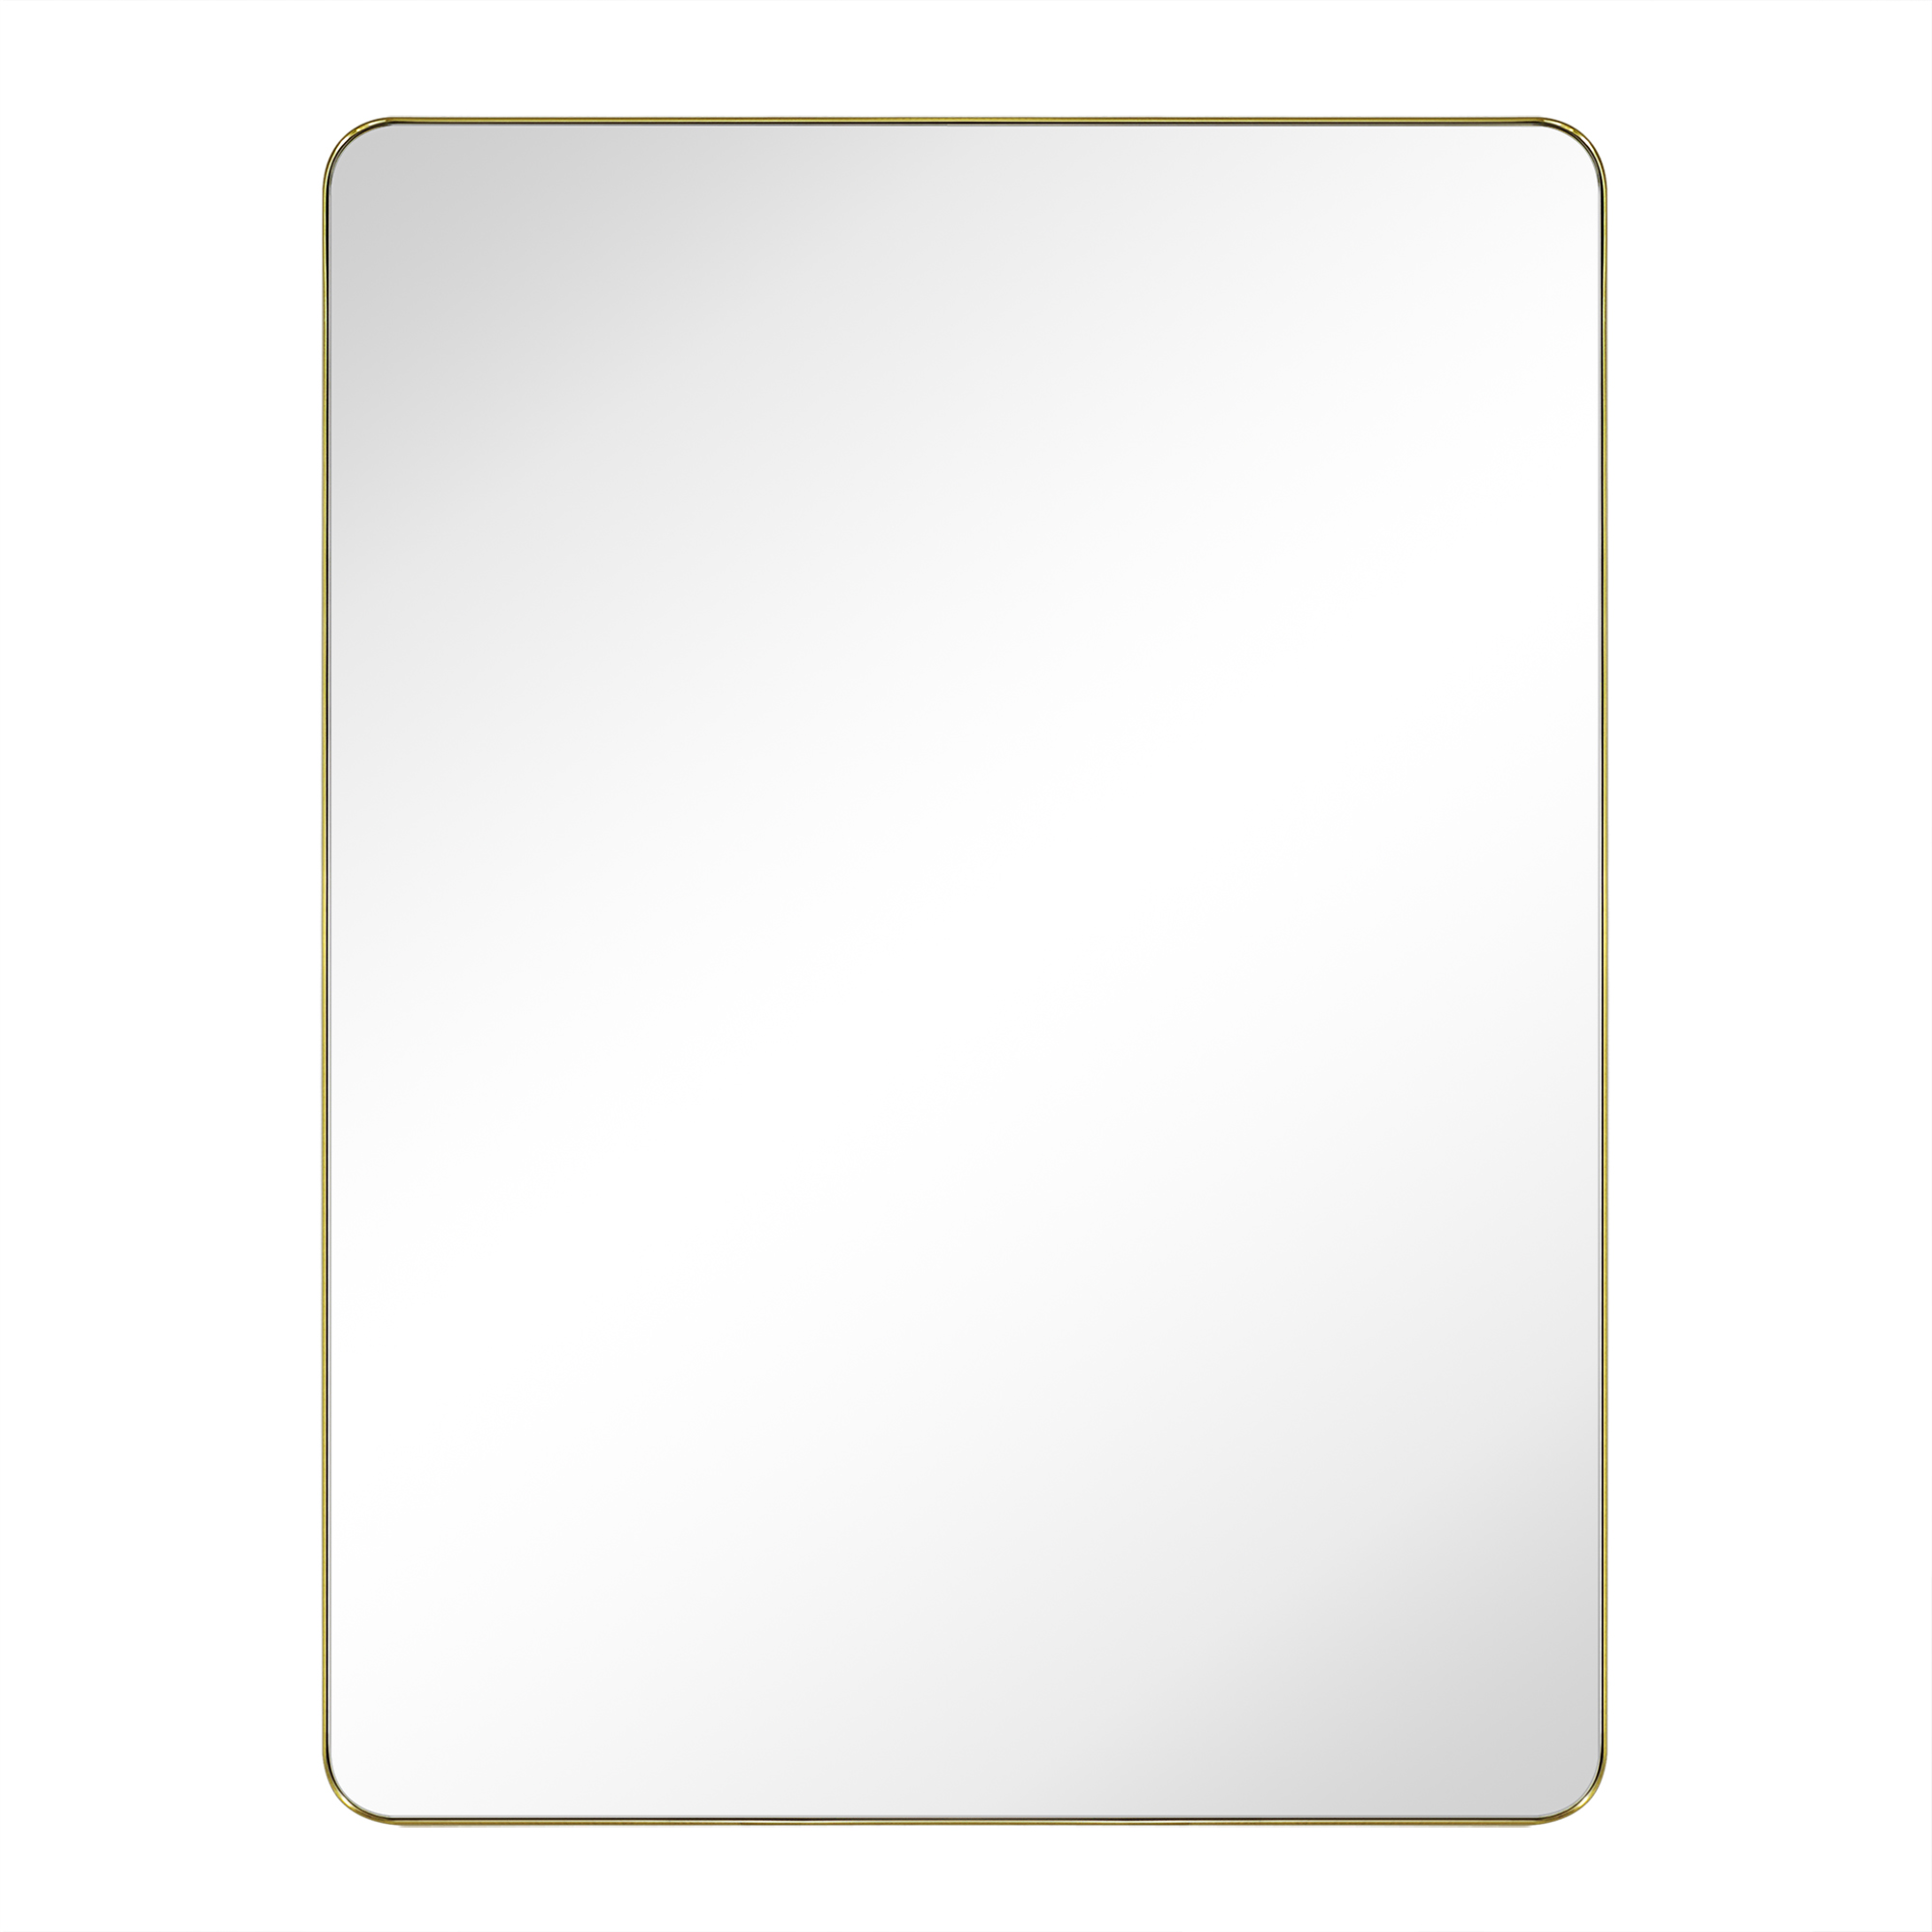 Kengston Modern & Contemporary Rectangular Bathroom Vanity Mirrors-30x40-Brushed Gold